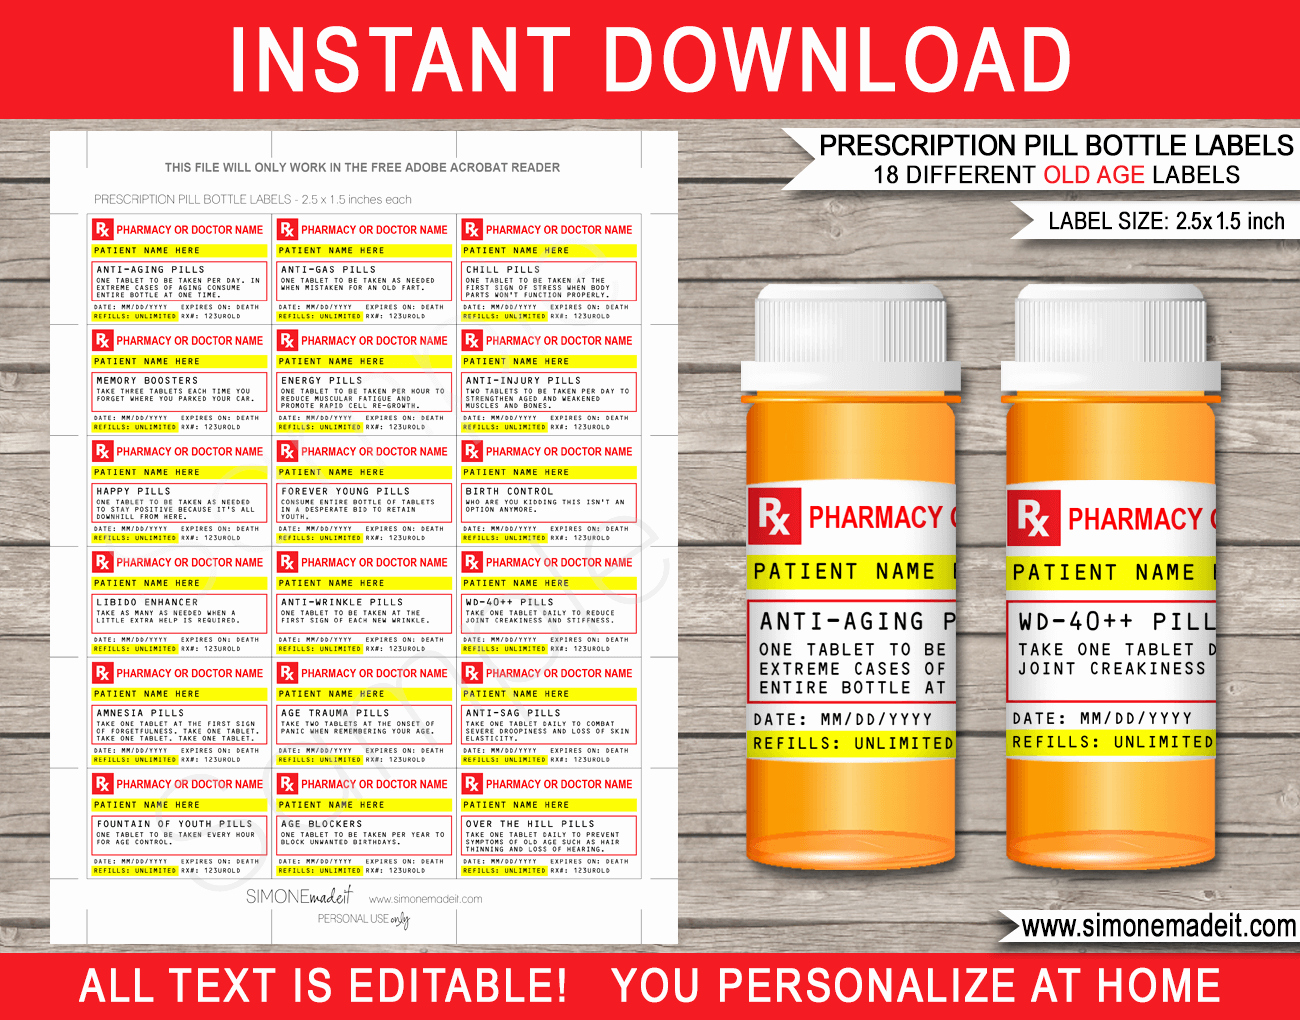 Pill Bottle Label Template Inspirational Old Age Prescription Pill Bottle Labels Gag Gift